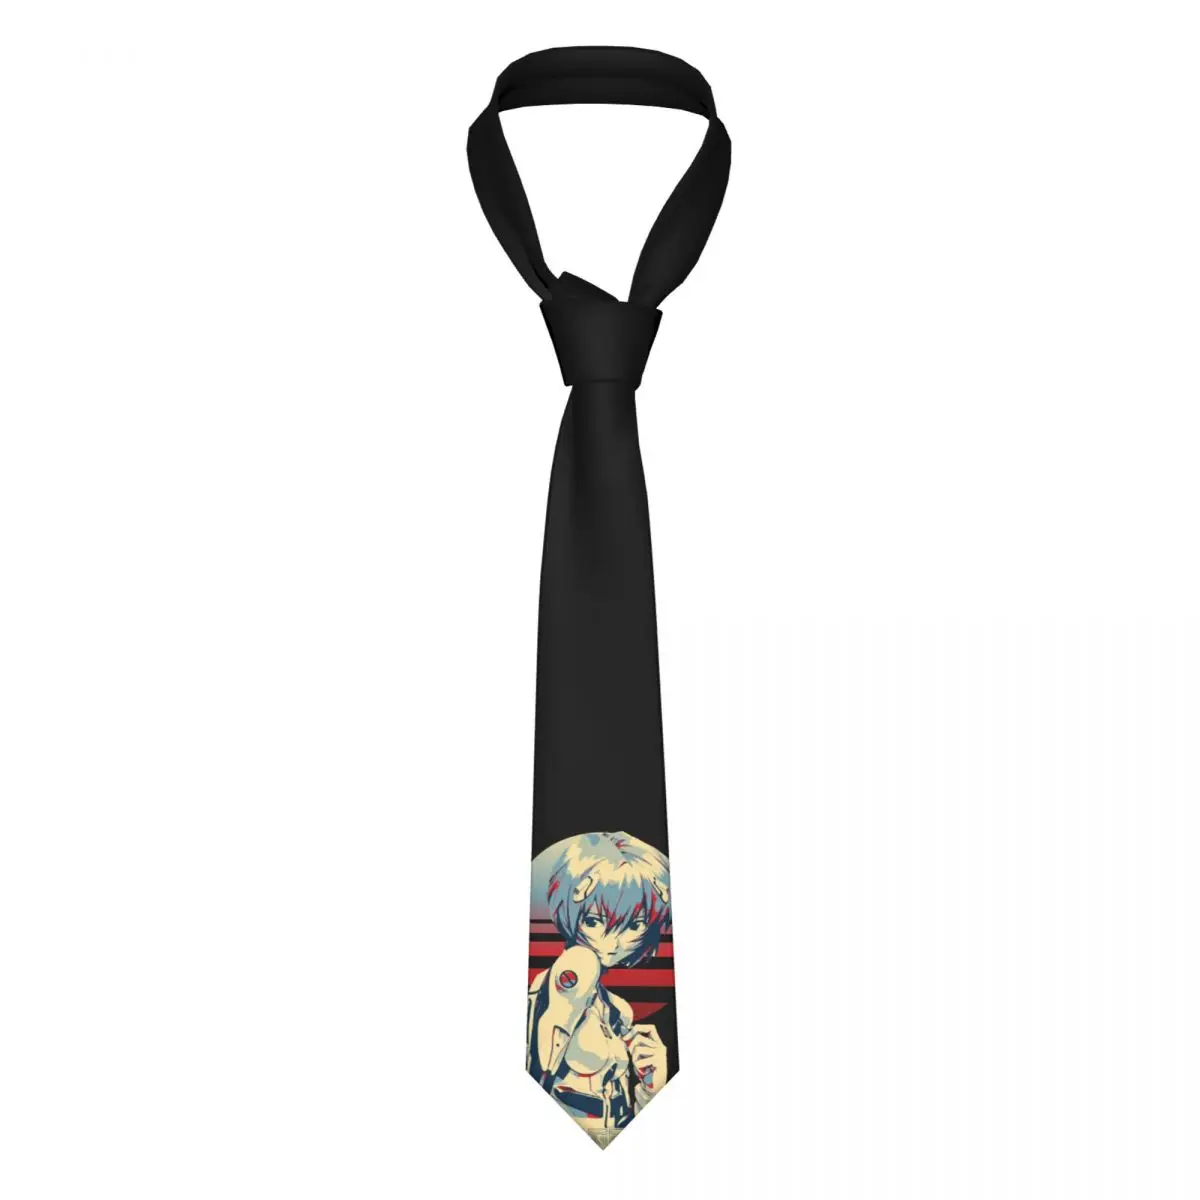 Rei Ayanami Classic Necktie Men Slim Polyester 8 cm Wide Japan Manga Anime Neck Tie for Men Shirt Accessories Gravatas Gift